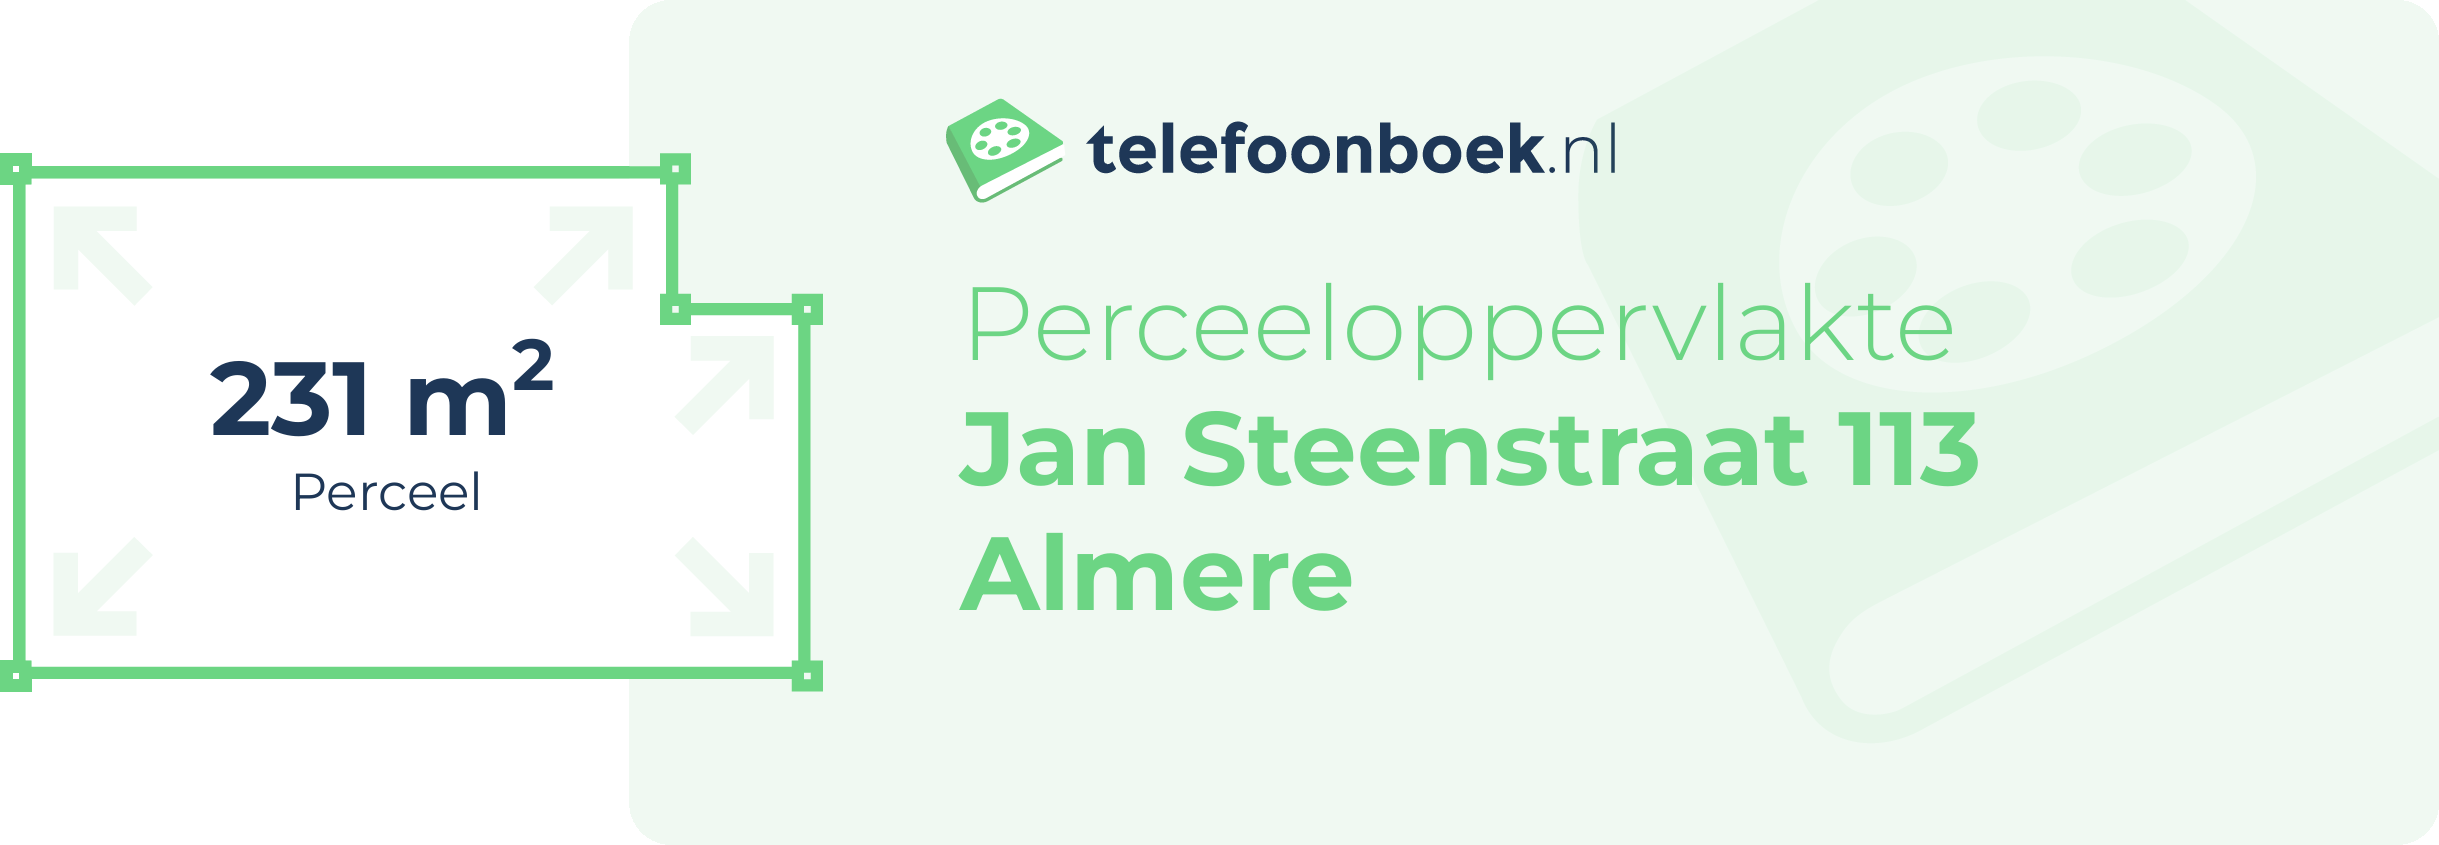 Perceeloppervlakte Jan Steenstraat 113 Almere